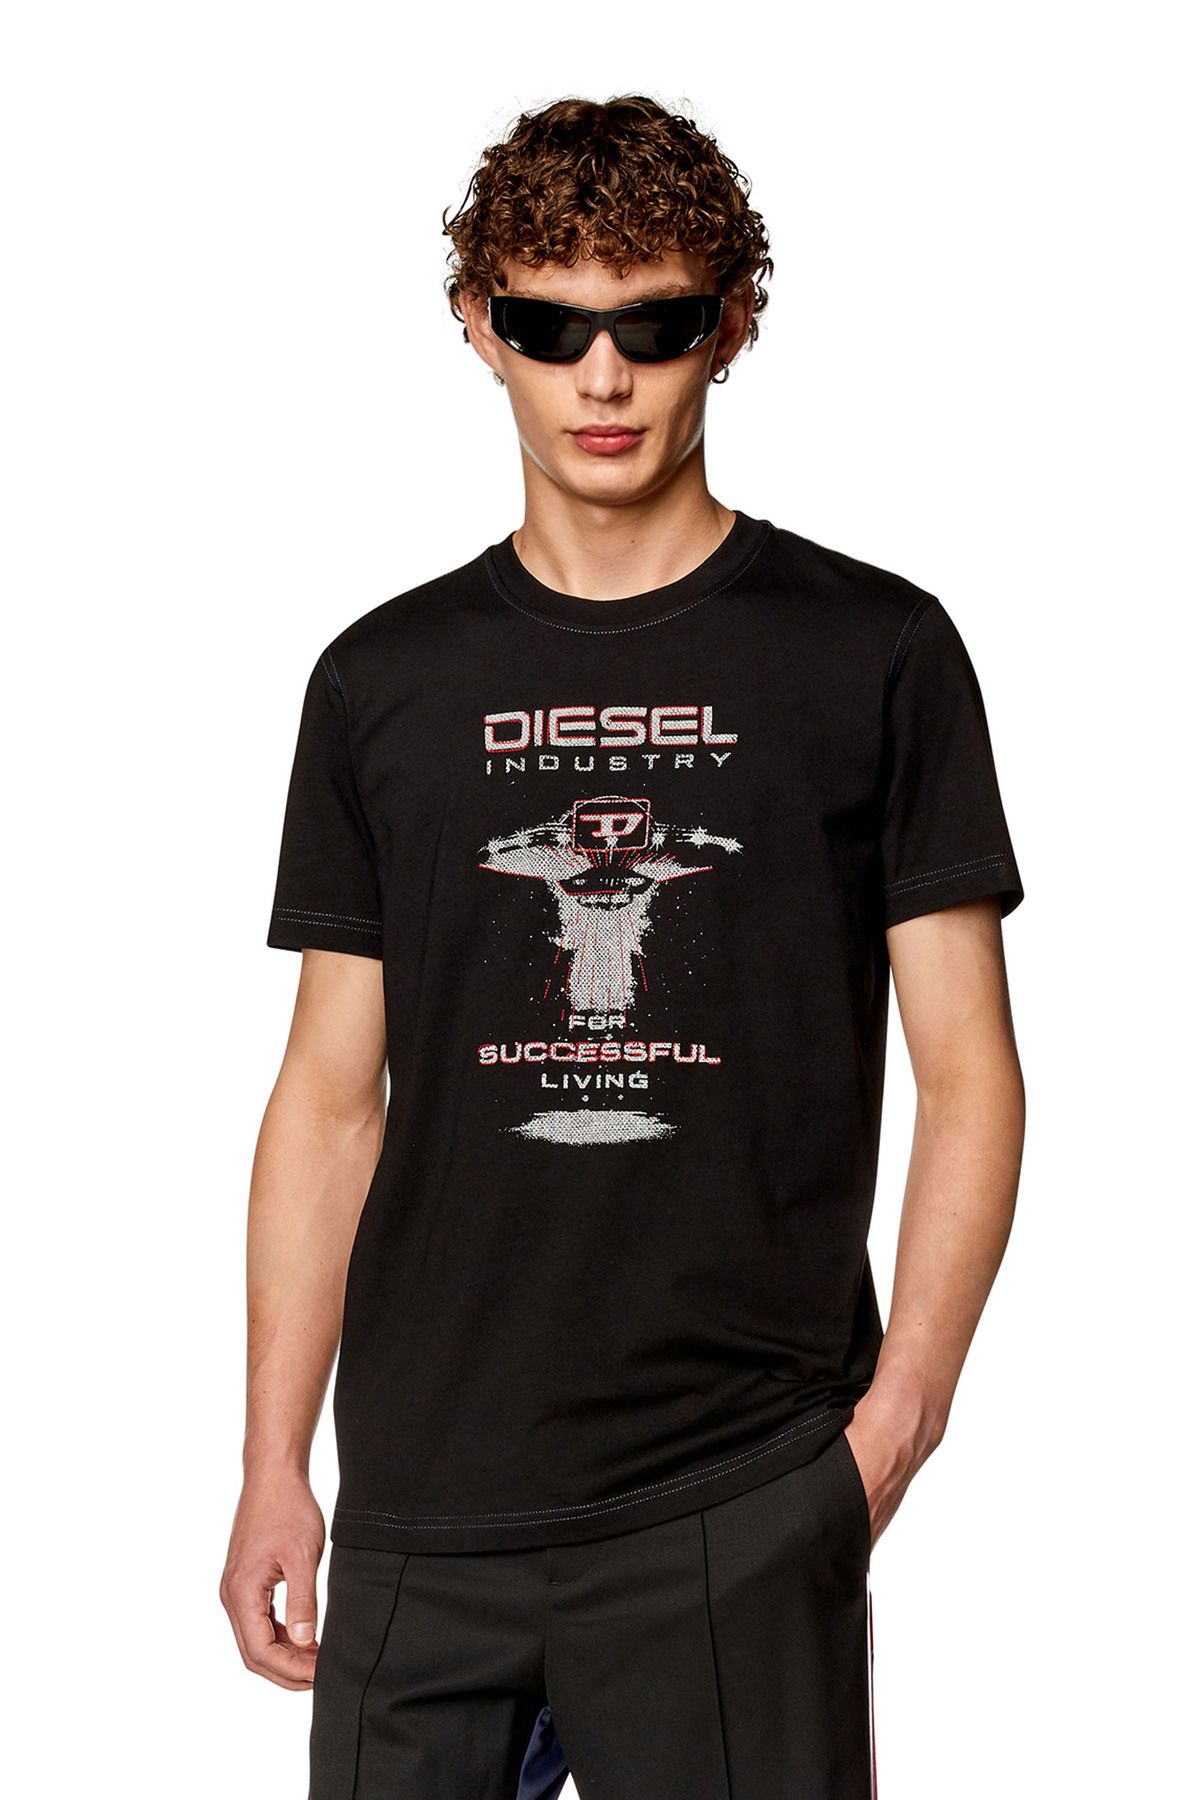 Diesel T-SHIRT